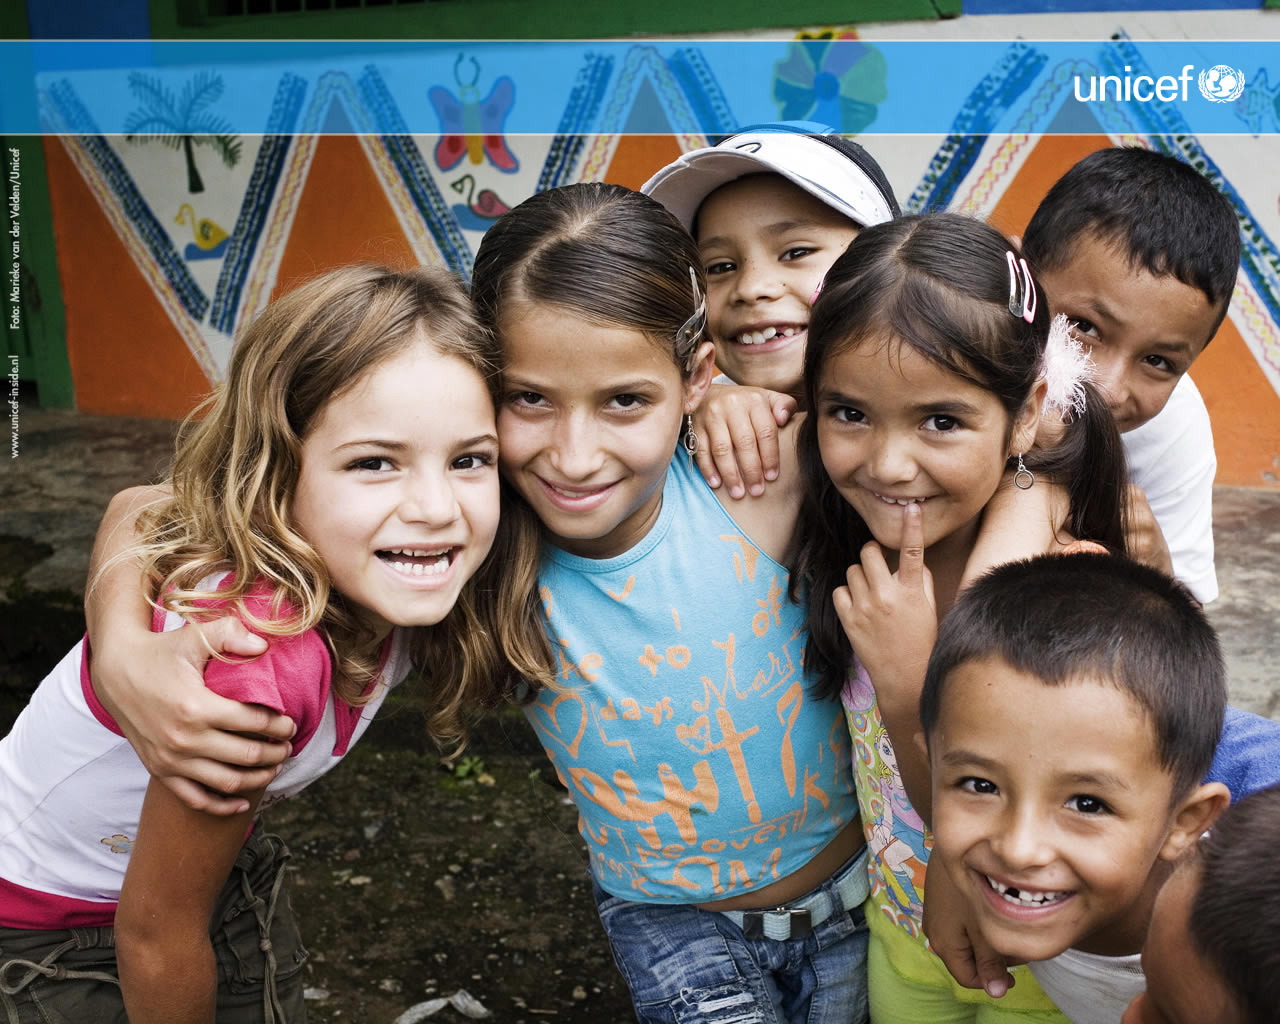 UNICEF: https://perspectivapositiva.files.wordpress.com/2013/06/unicef8-1280.jpg